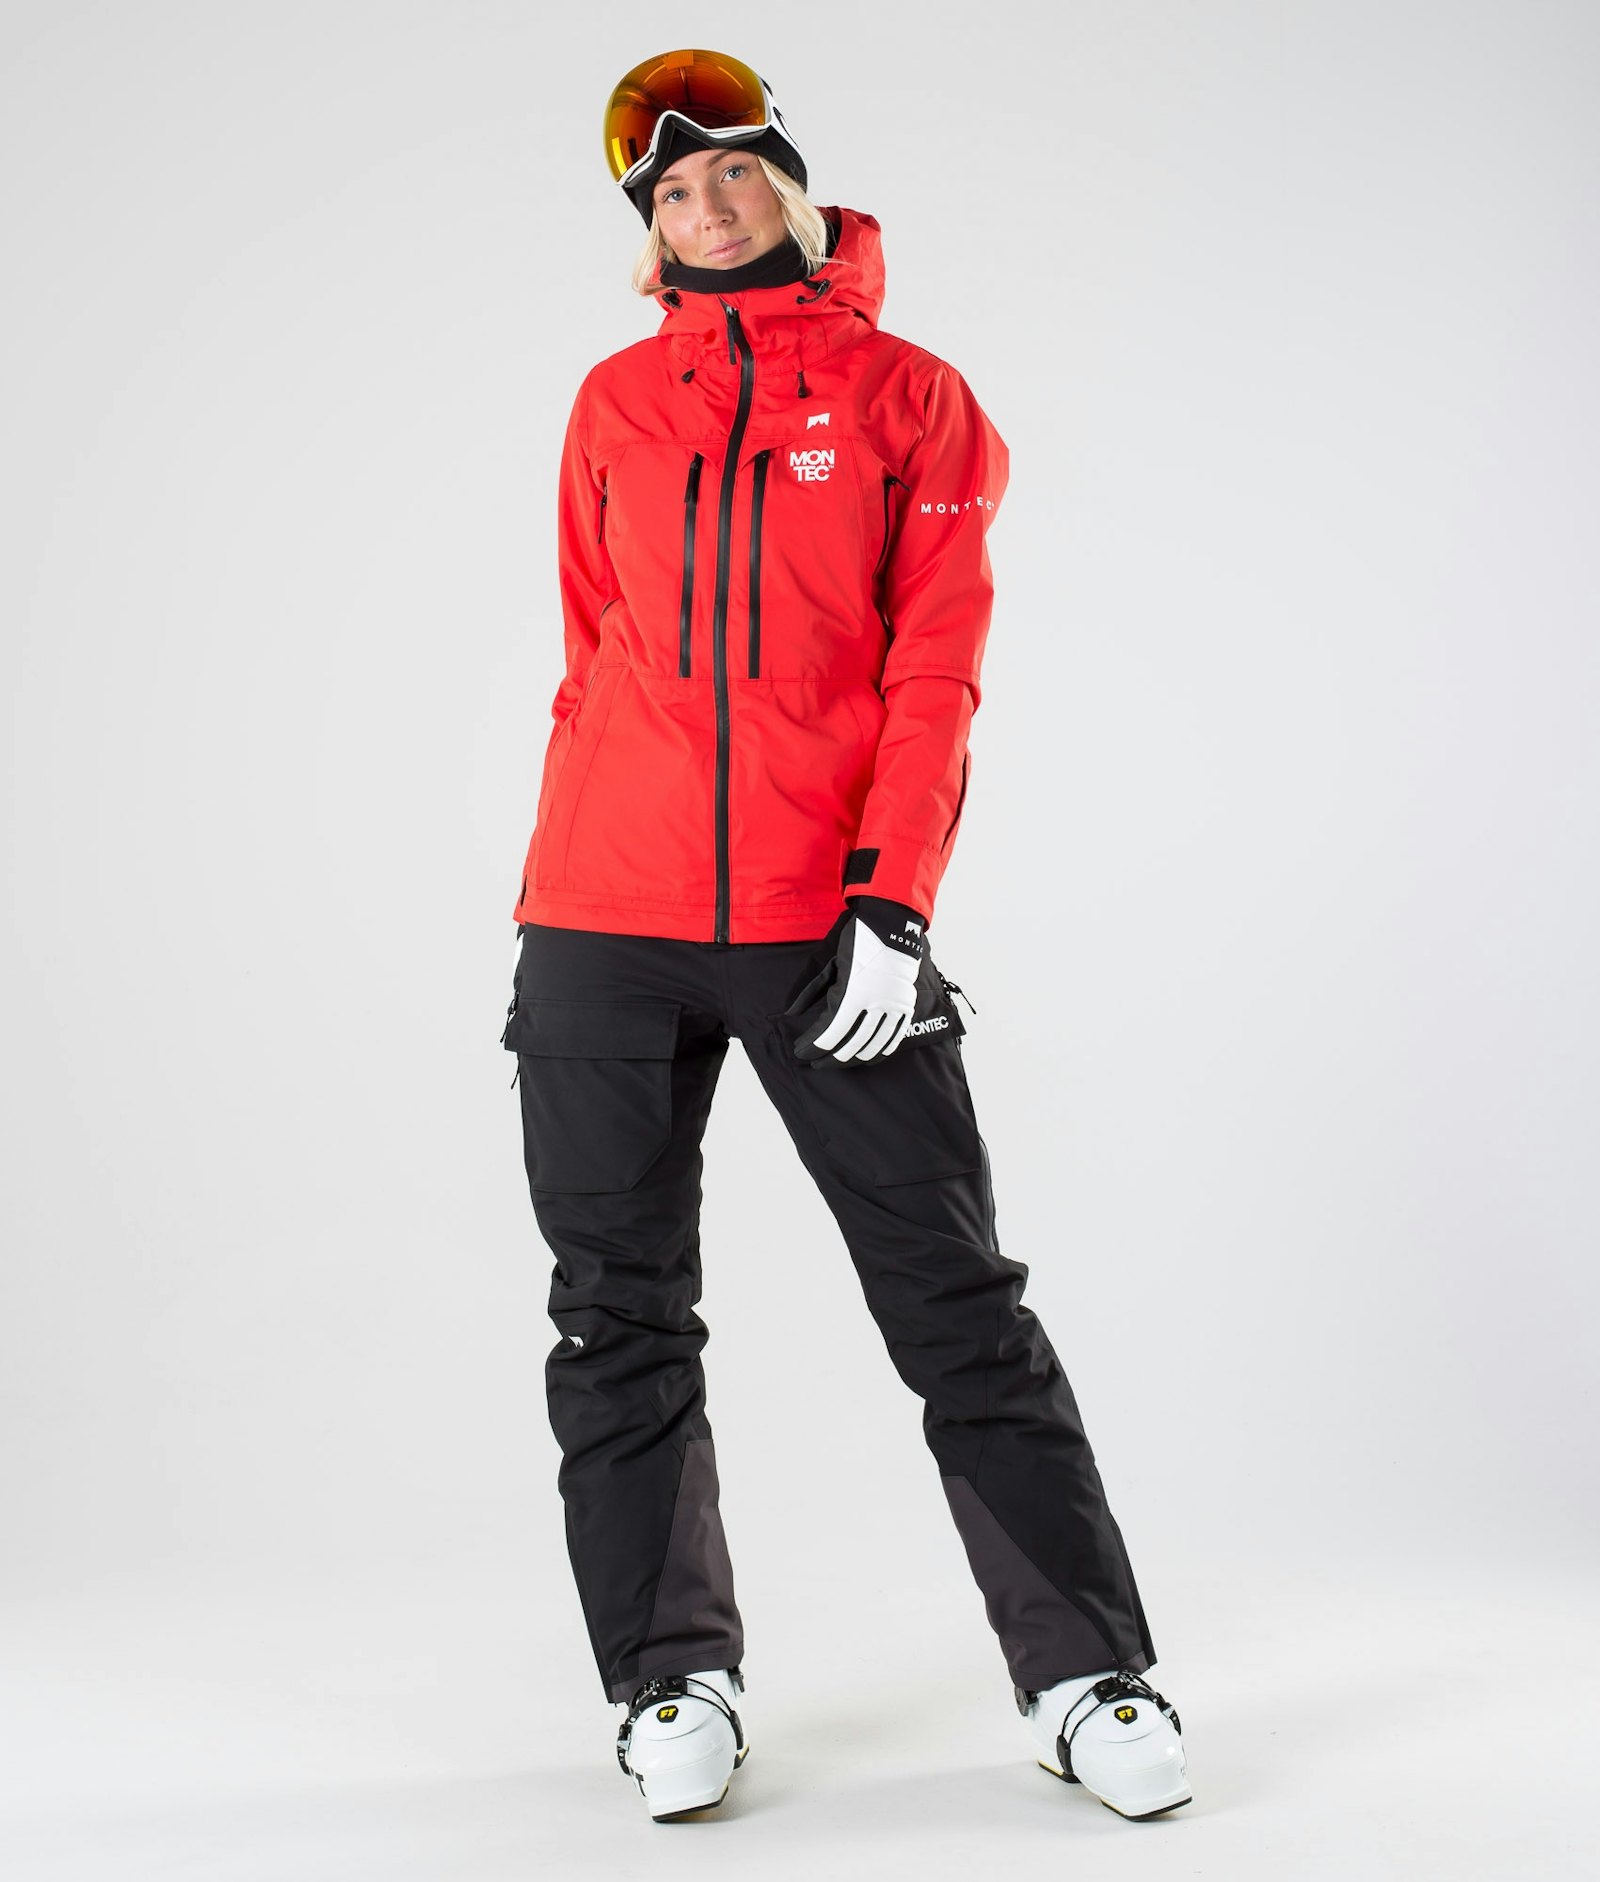 Moss W 2019 Skijakke Dame Red